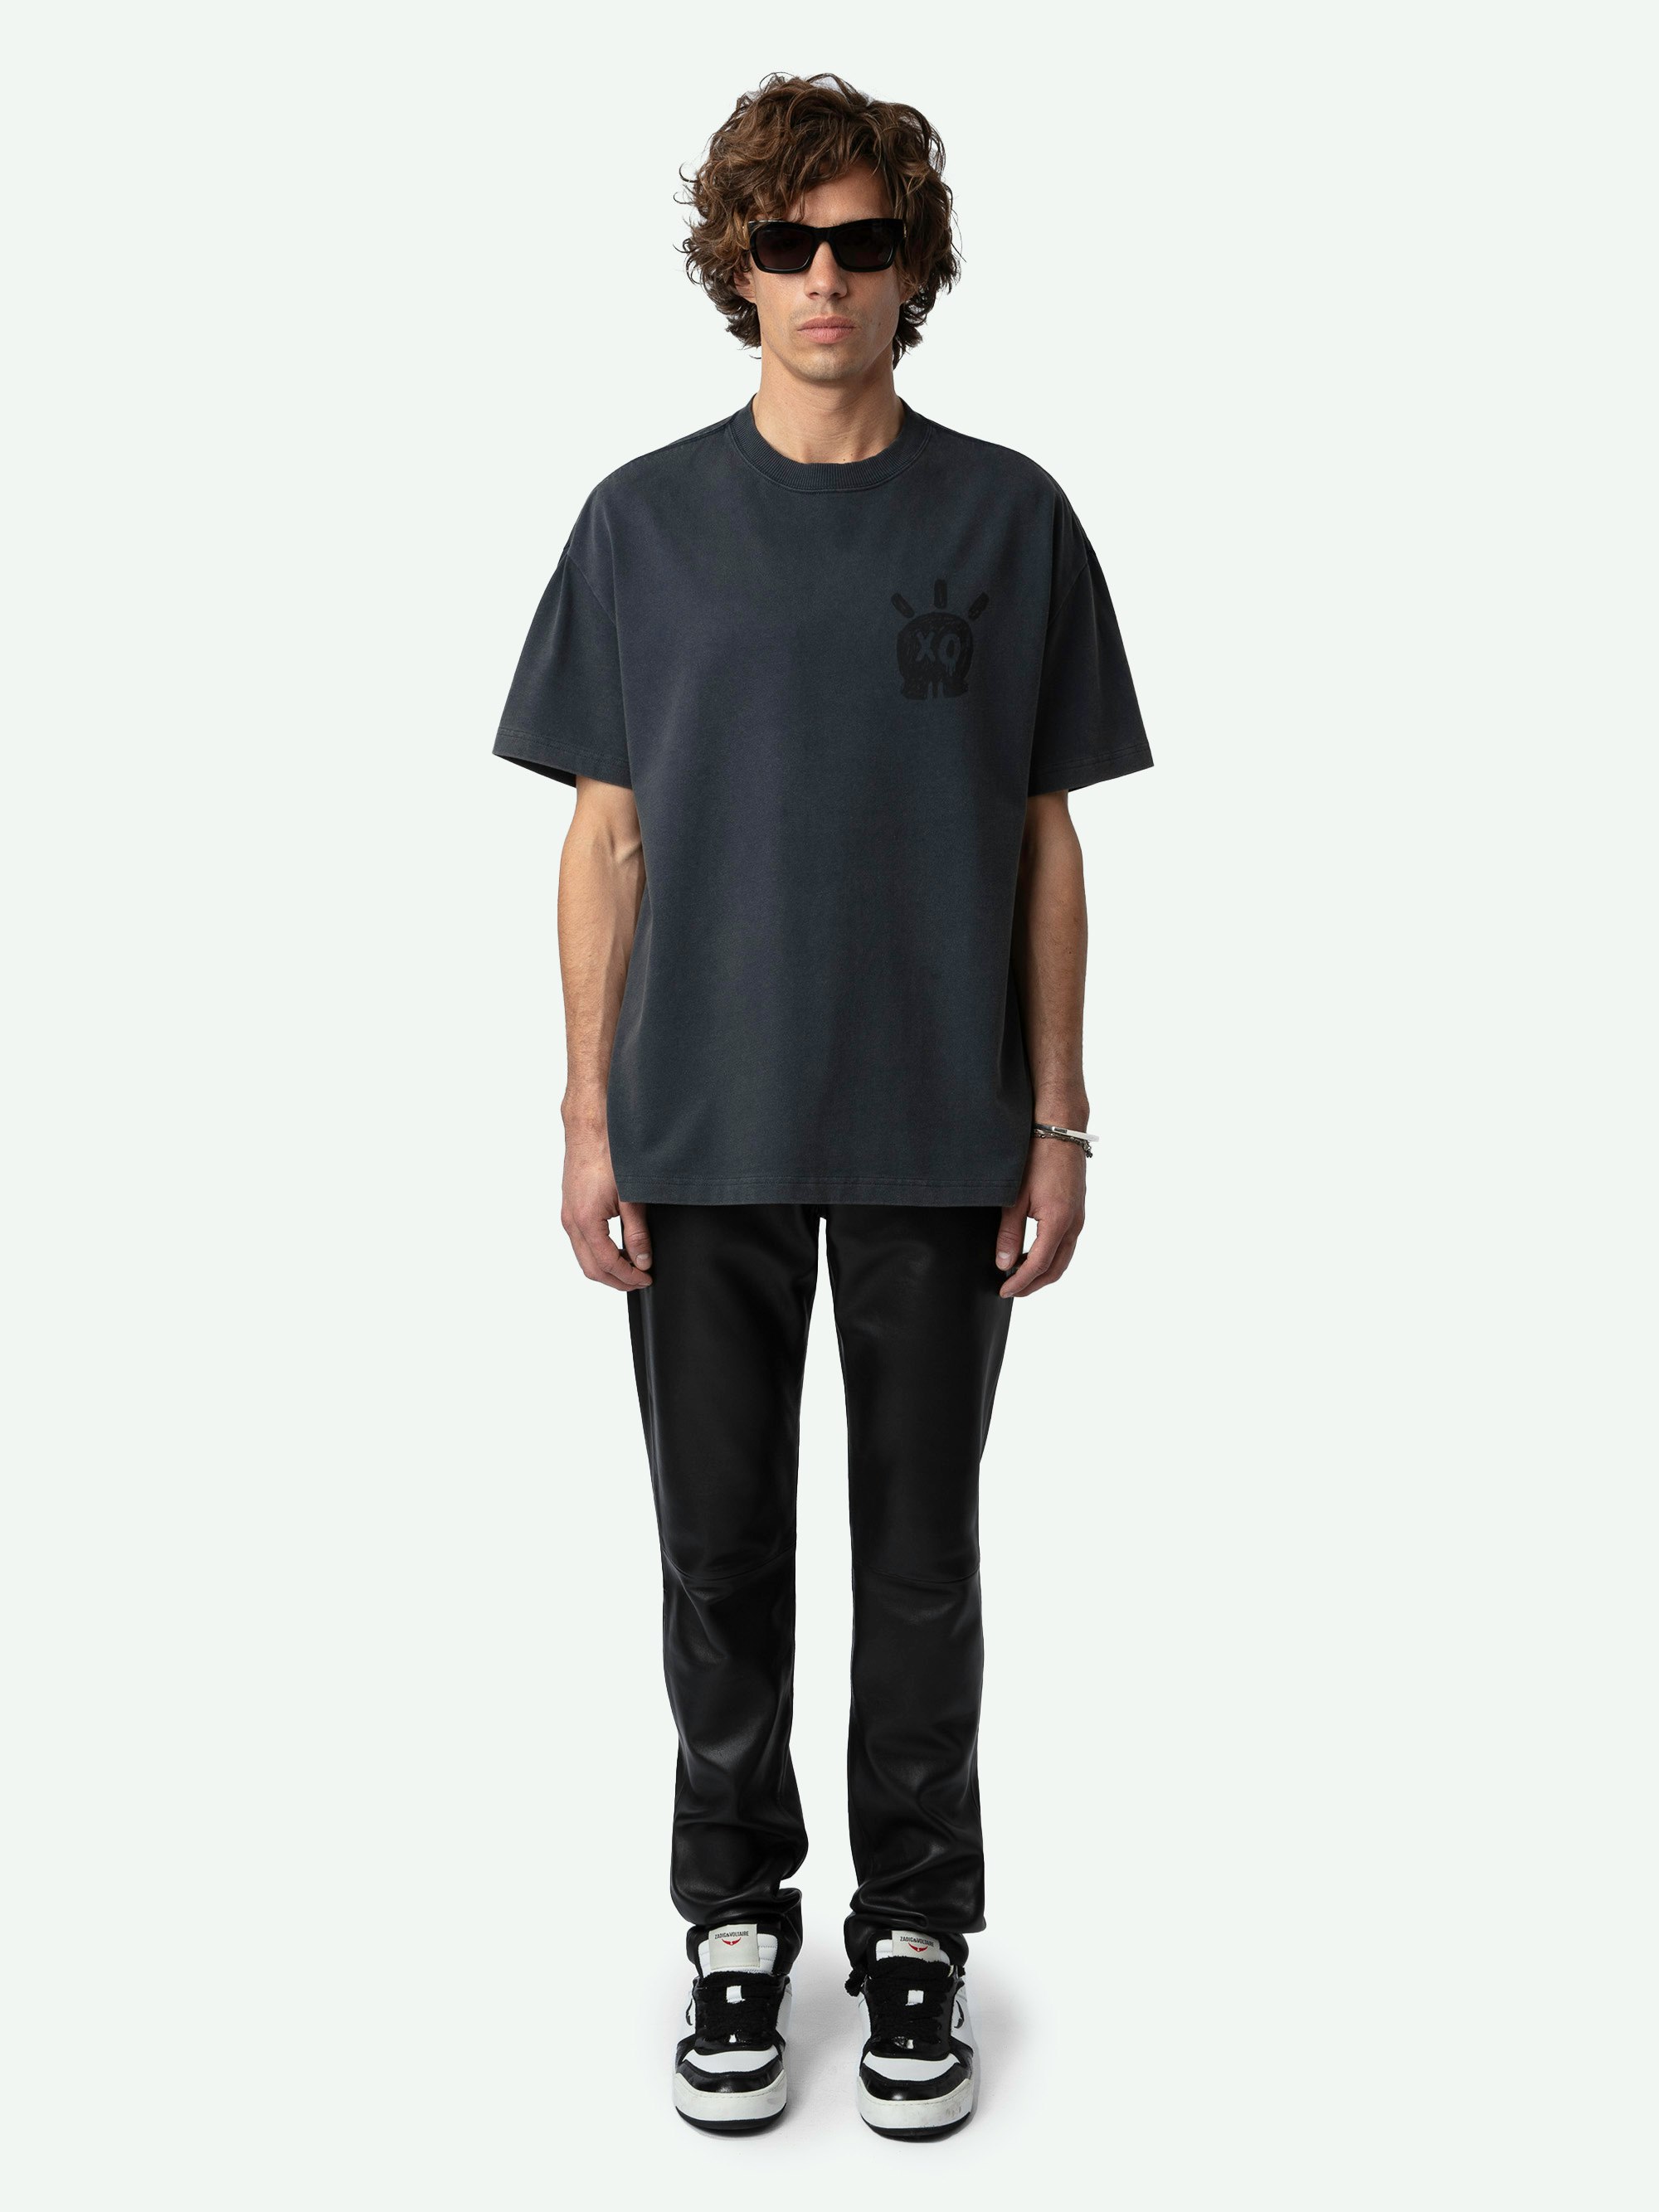 Camiseta Teddy Skull - Camiseta oversize de algodón ecológico, de manga corta, con estampado XO Skull en la parte delantera.